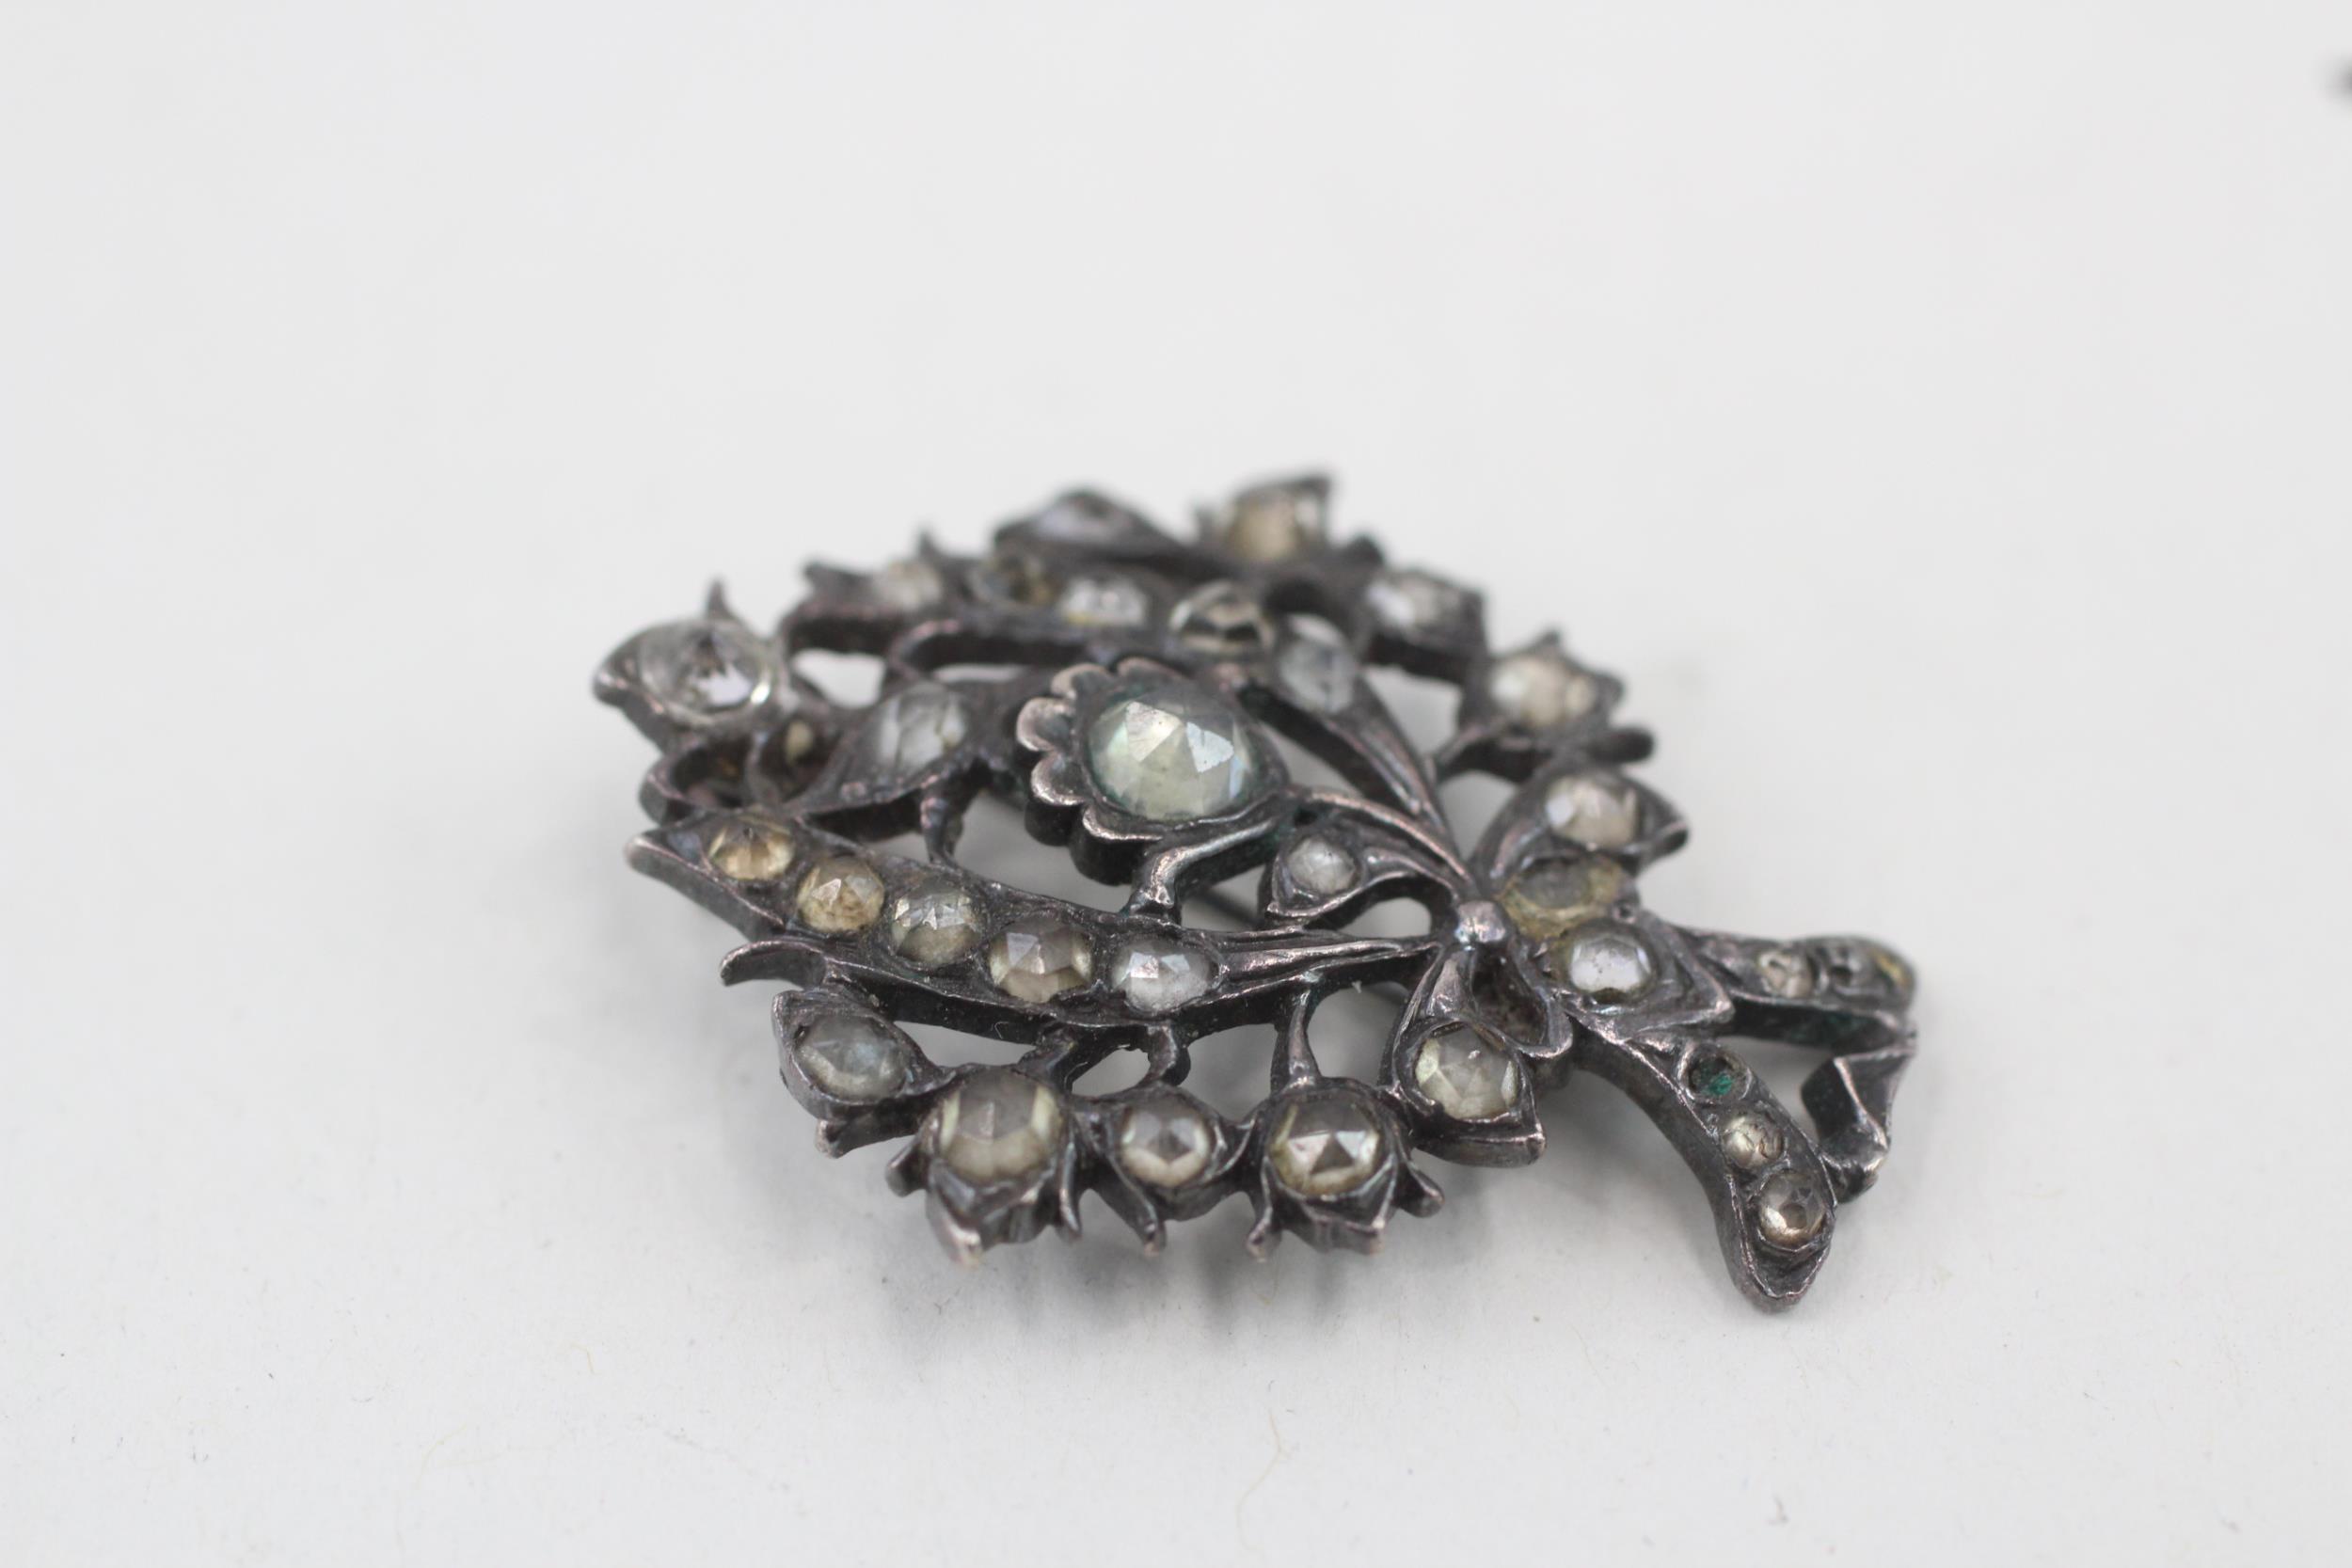 Silver 19th century Iberian old cut gemstone brooch (7g) - Image 2 of 8